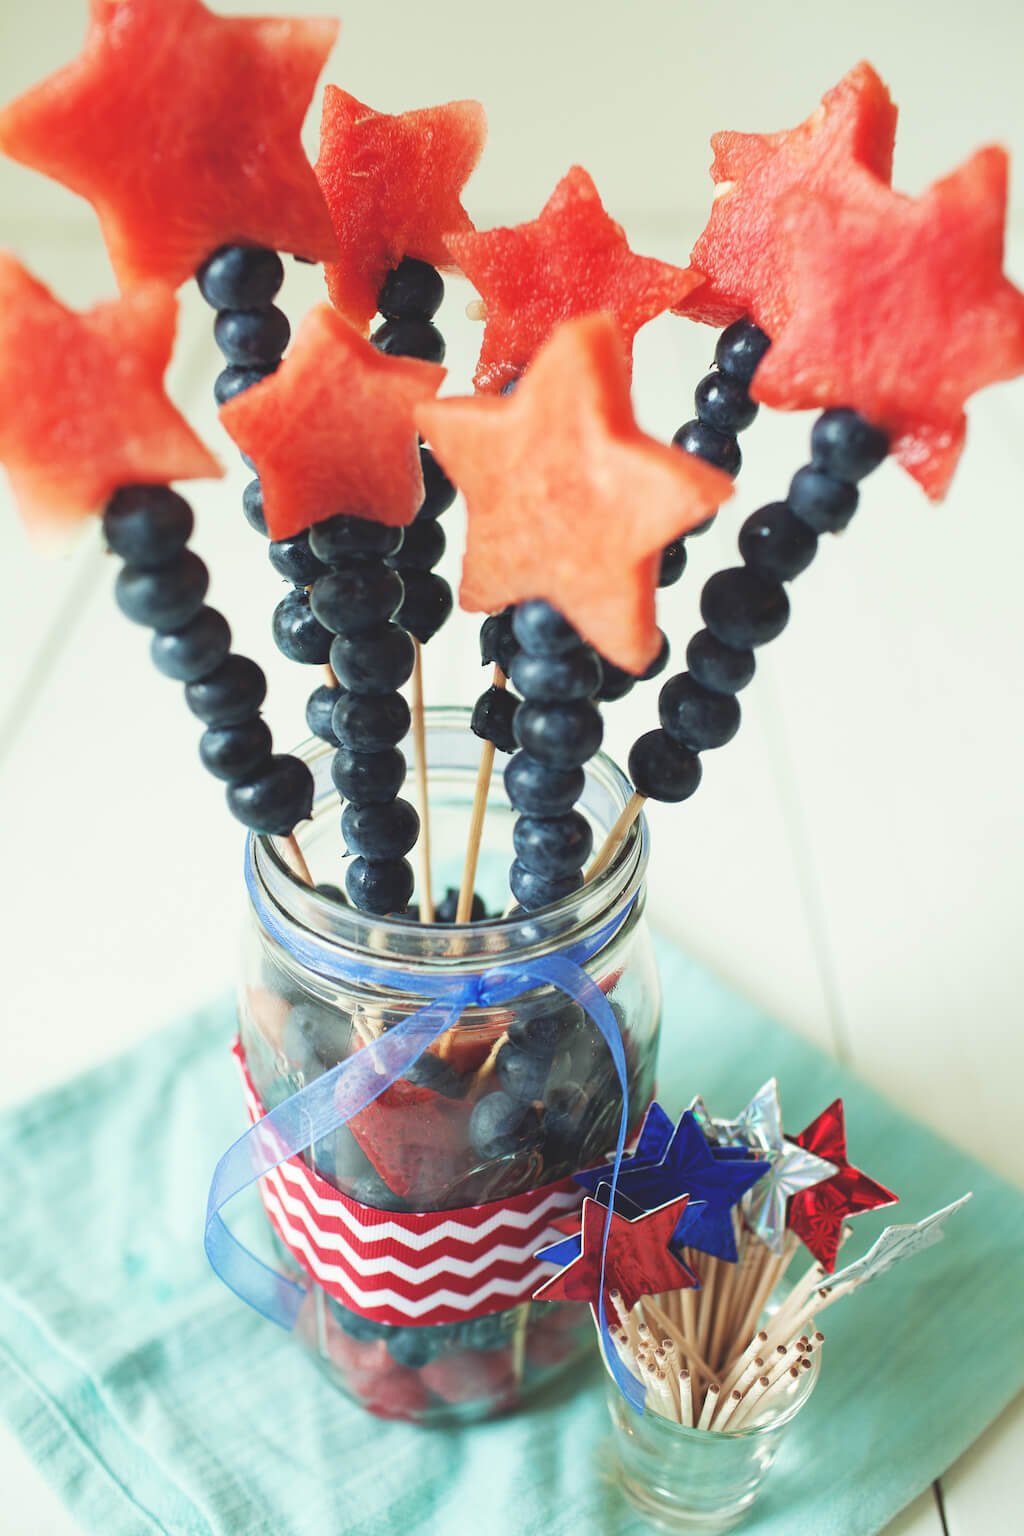 Patriotic Fruit Wands